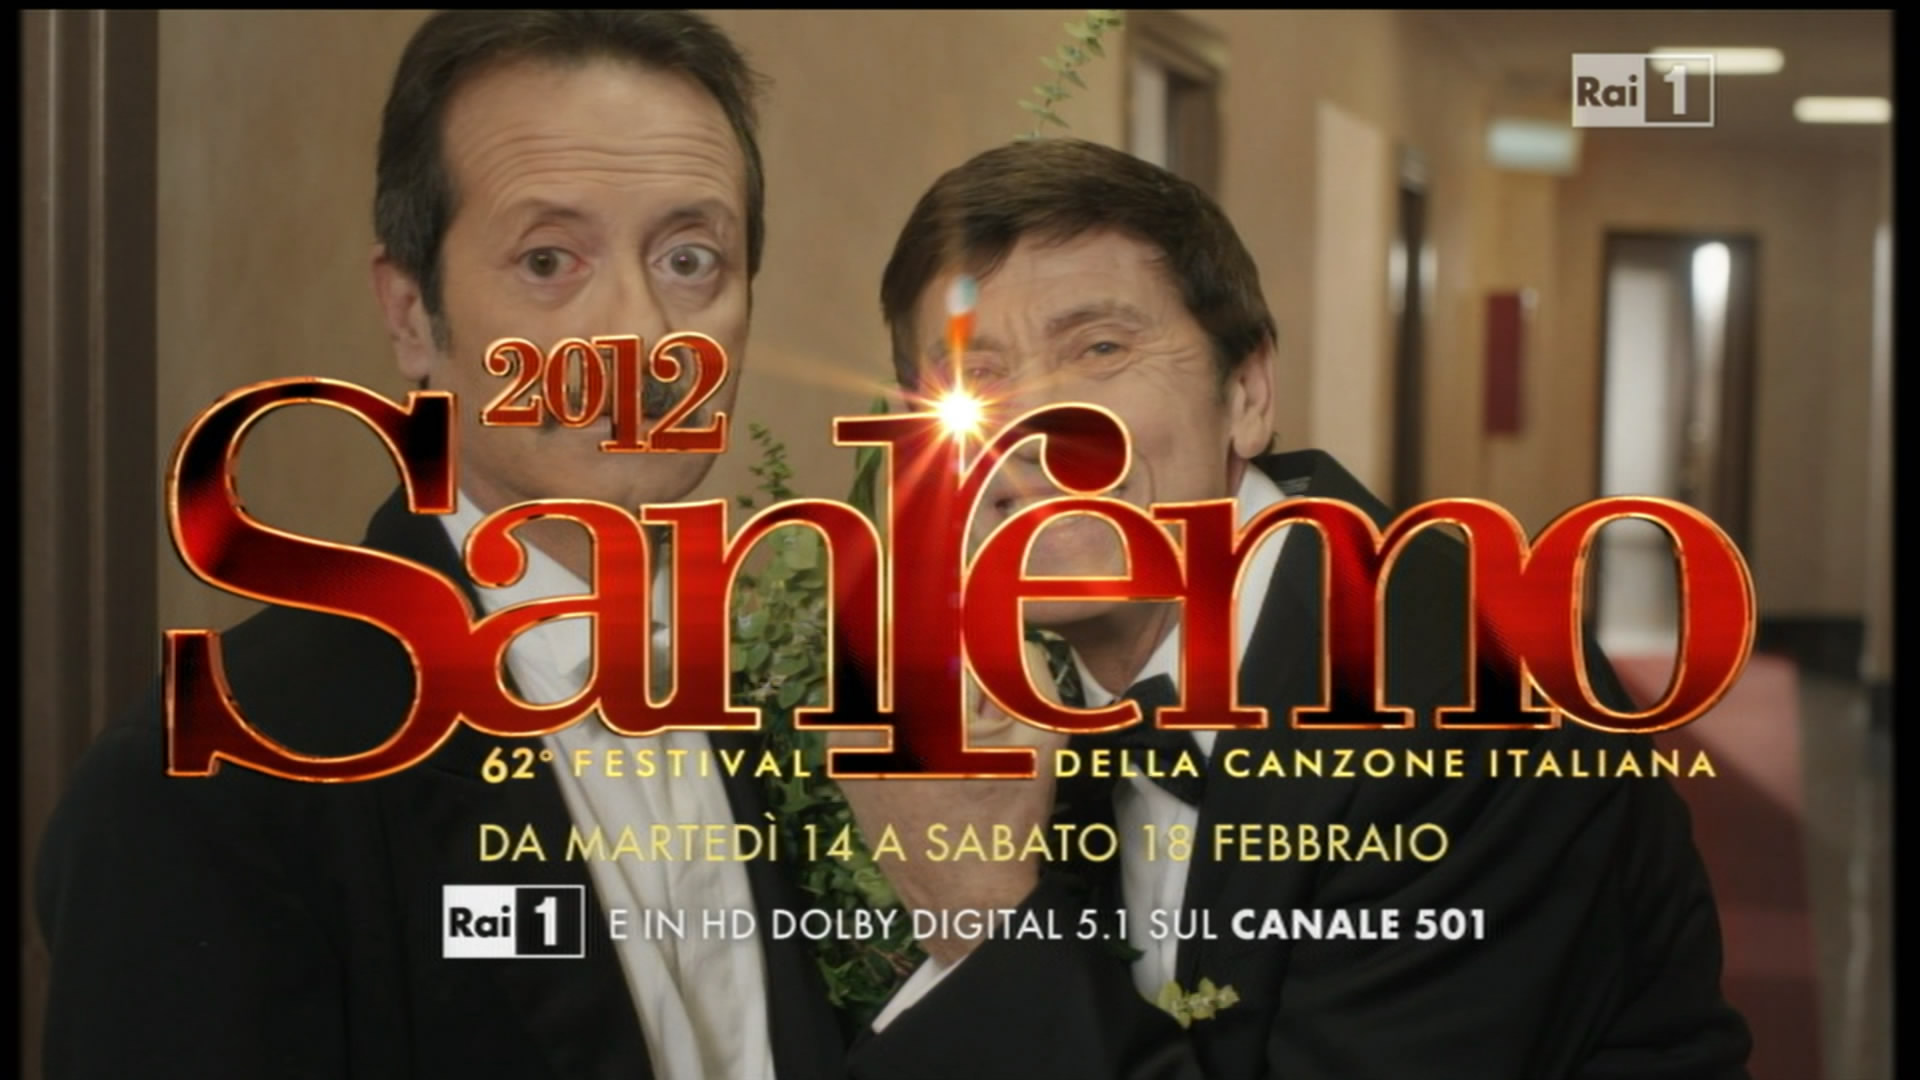 Rai, con Sanremo esordio del '3D audio' in un evento musicale tv